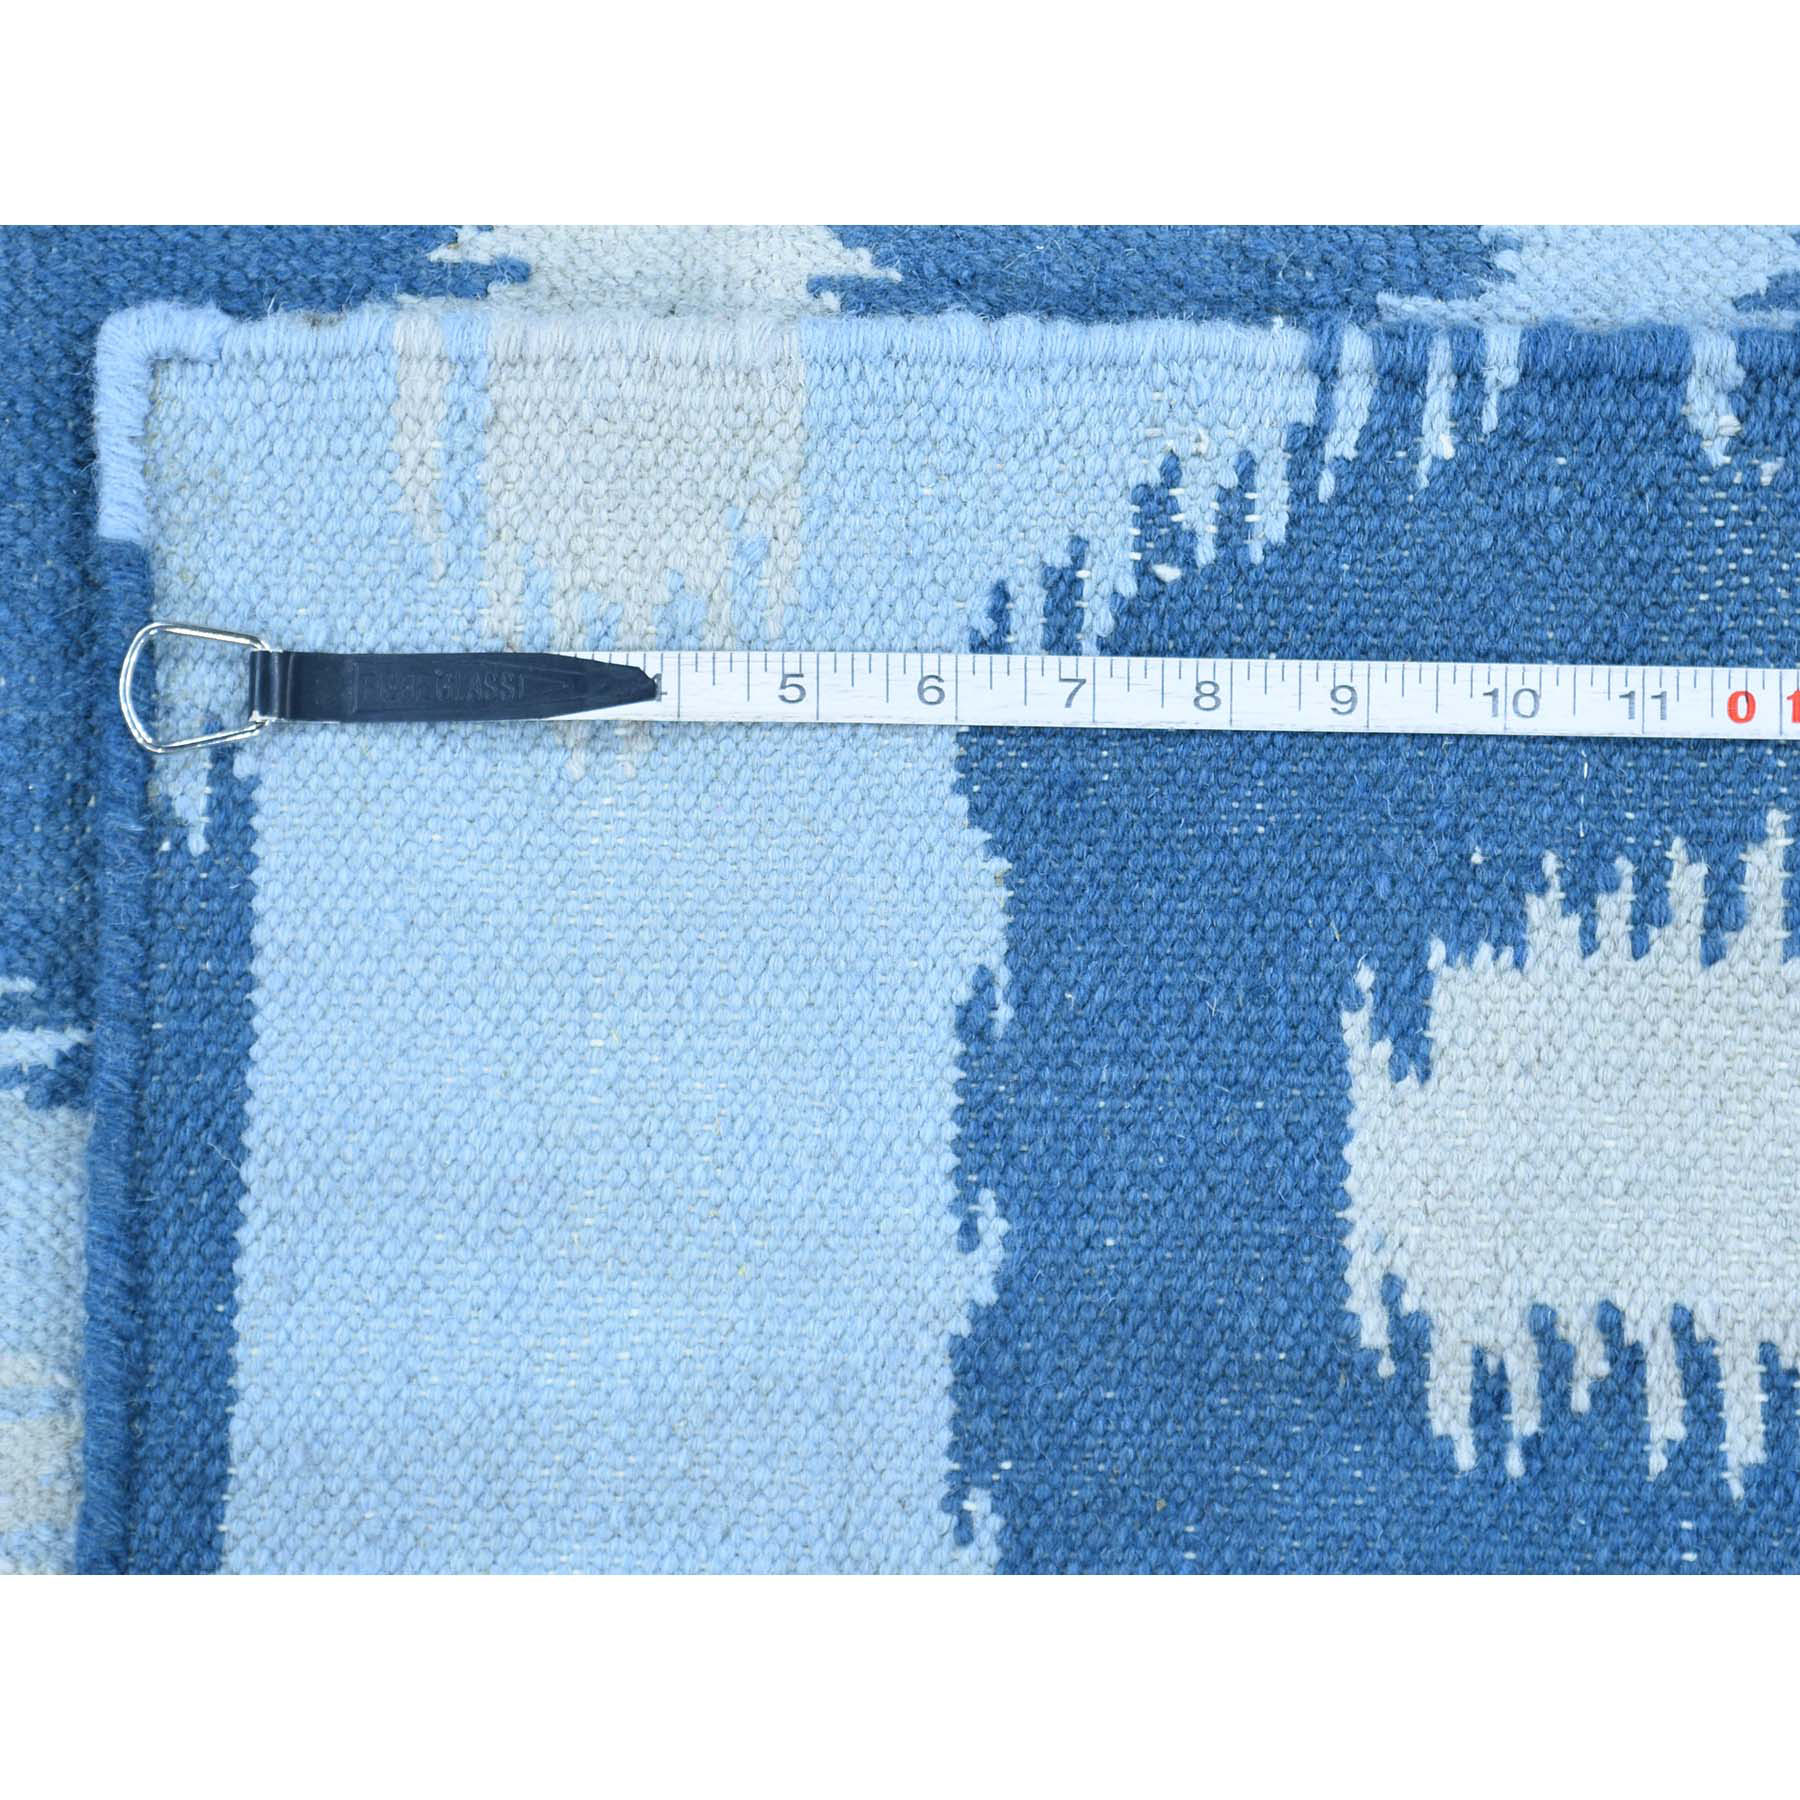 4-2 x6-1  Geometric Design Hand-Woven Reversible Kilim Flat Weave Rug 